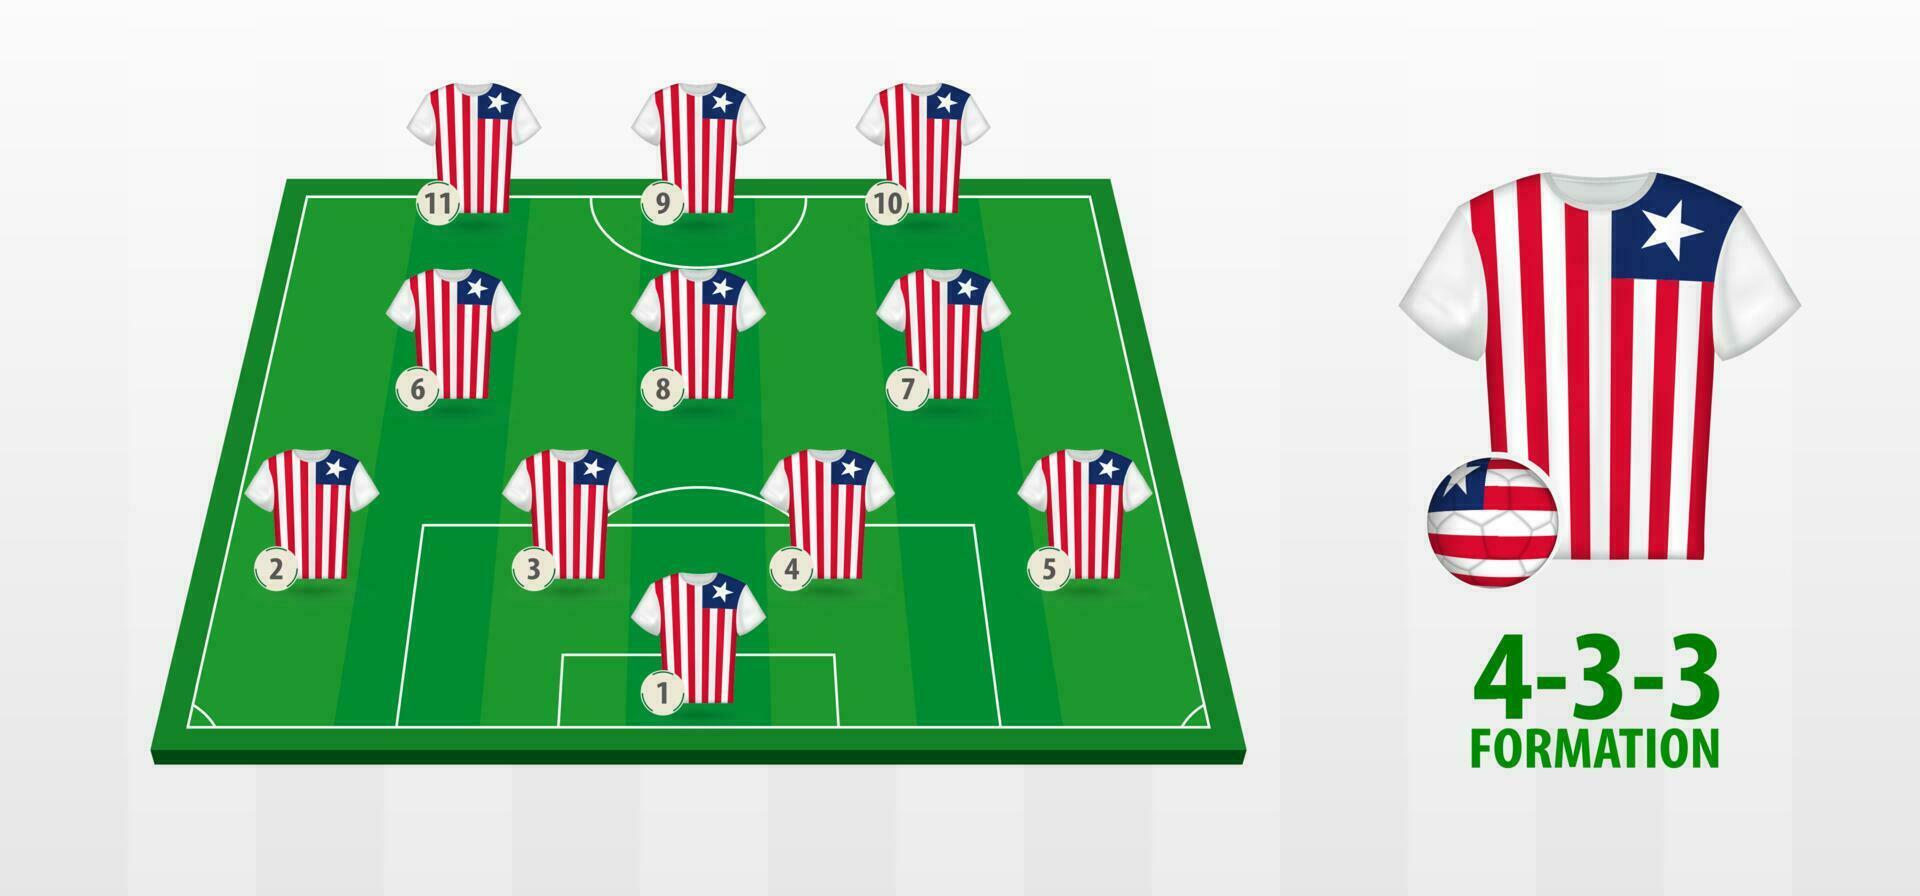 Liberia National Football Team Formation on Football Field. vector